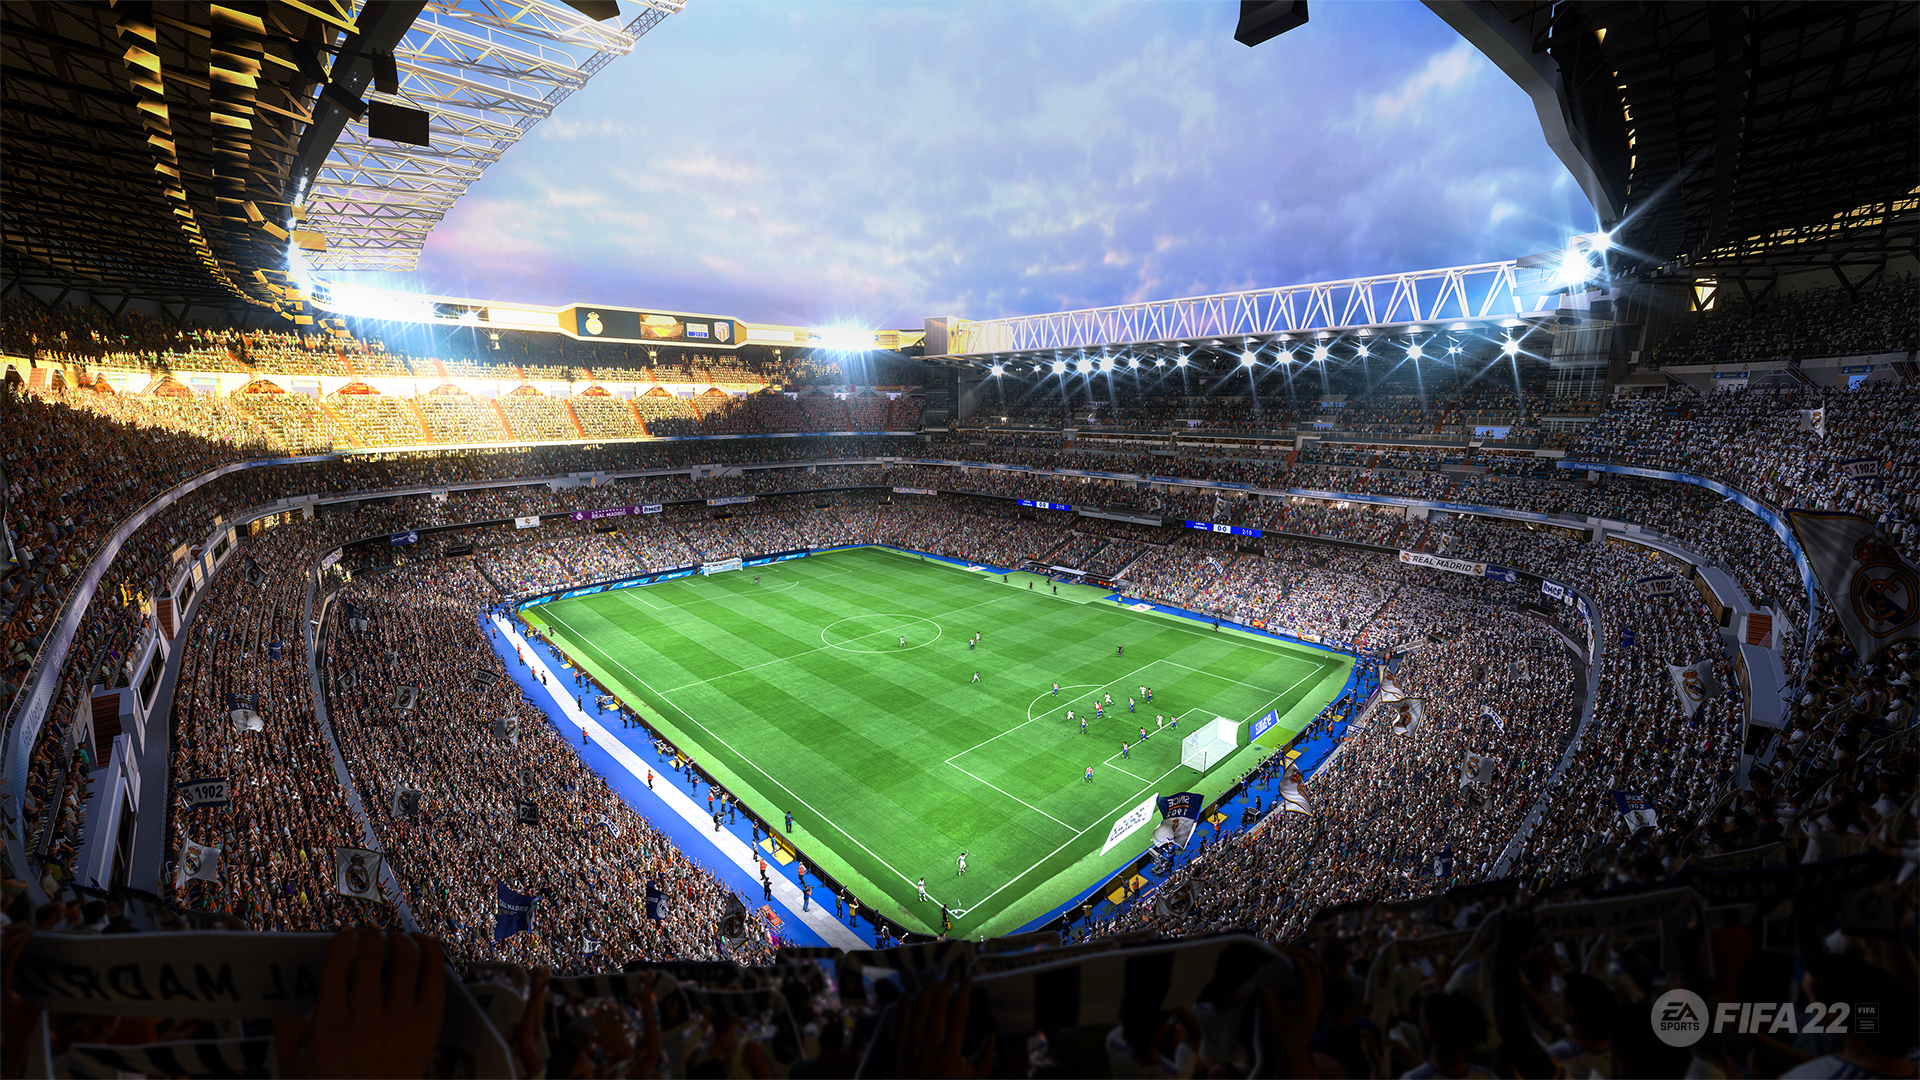 Estadio Santiago Bernabeu Real Madrid FIFA 22 EA Sports Stadion Arena